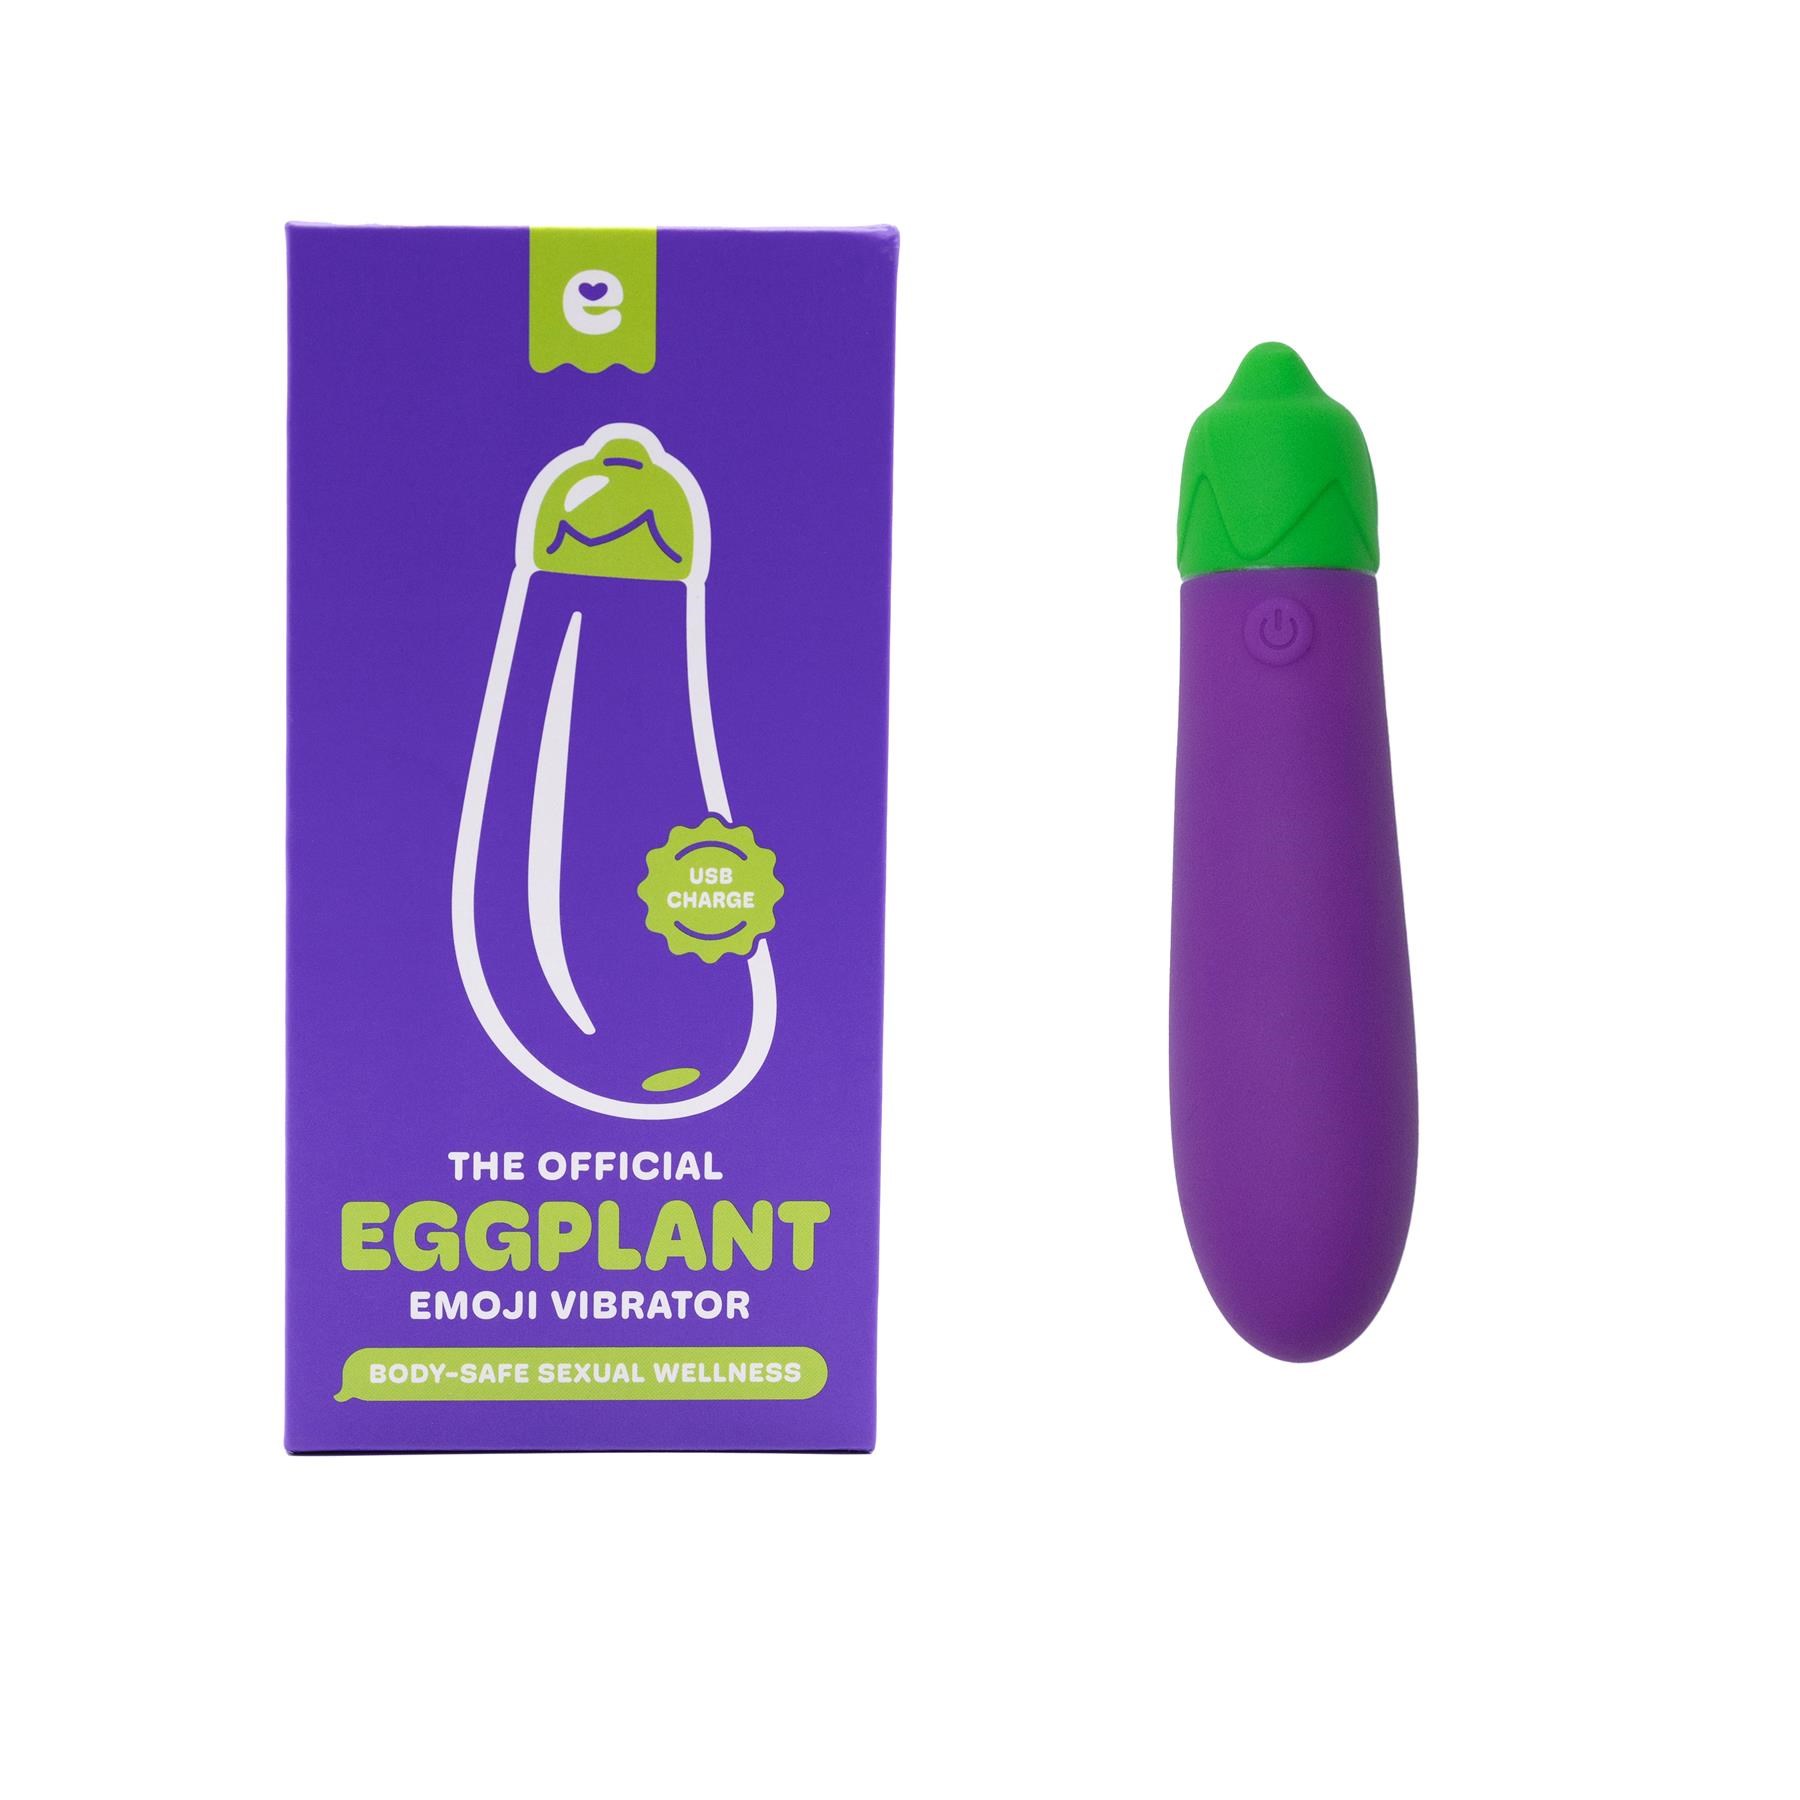 Emojibator Eggplant Emoji Vibrator - Product and Packaging